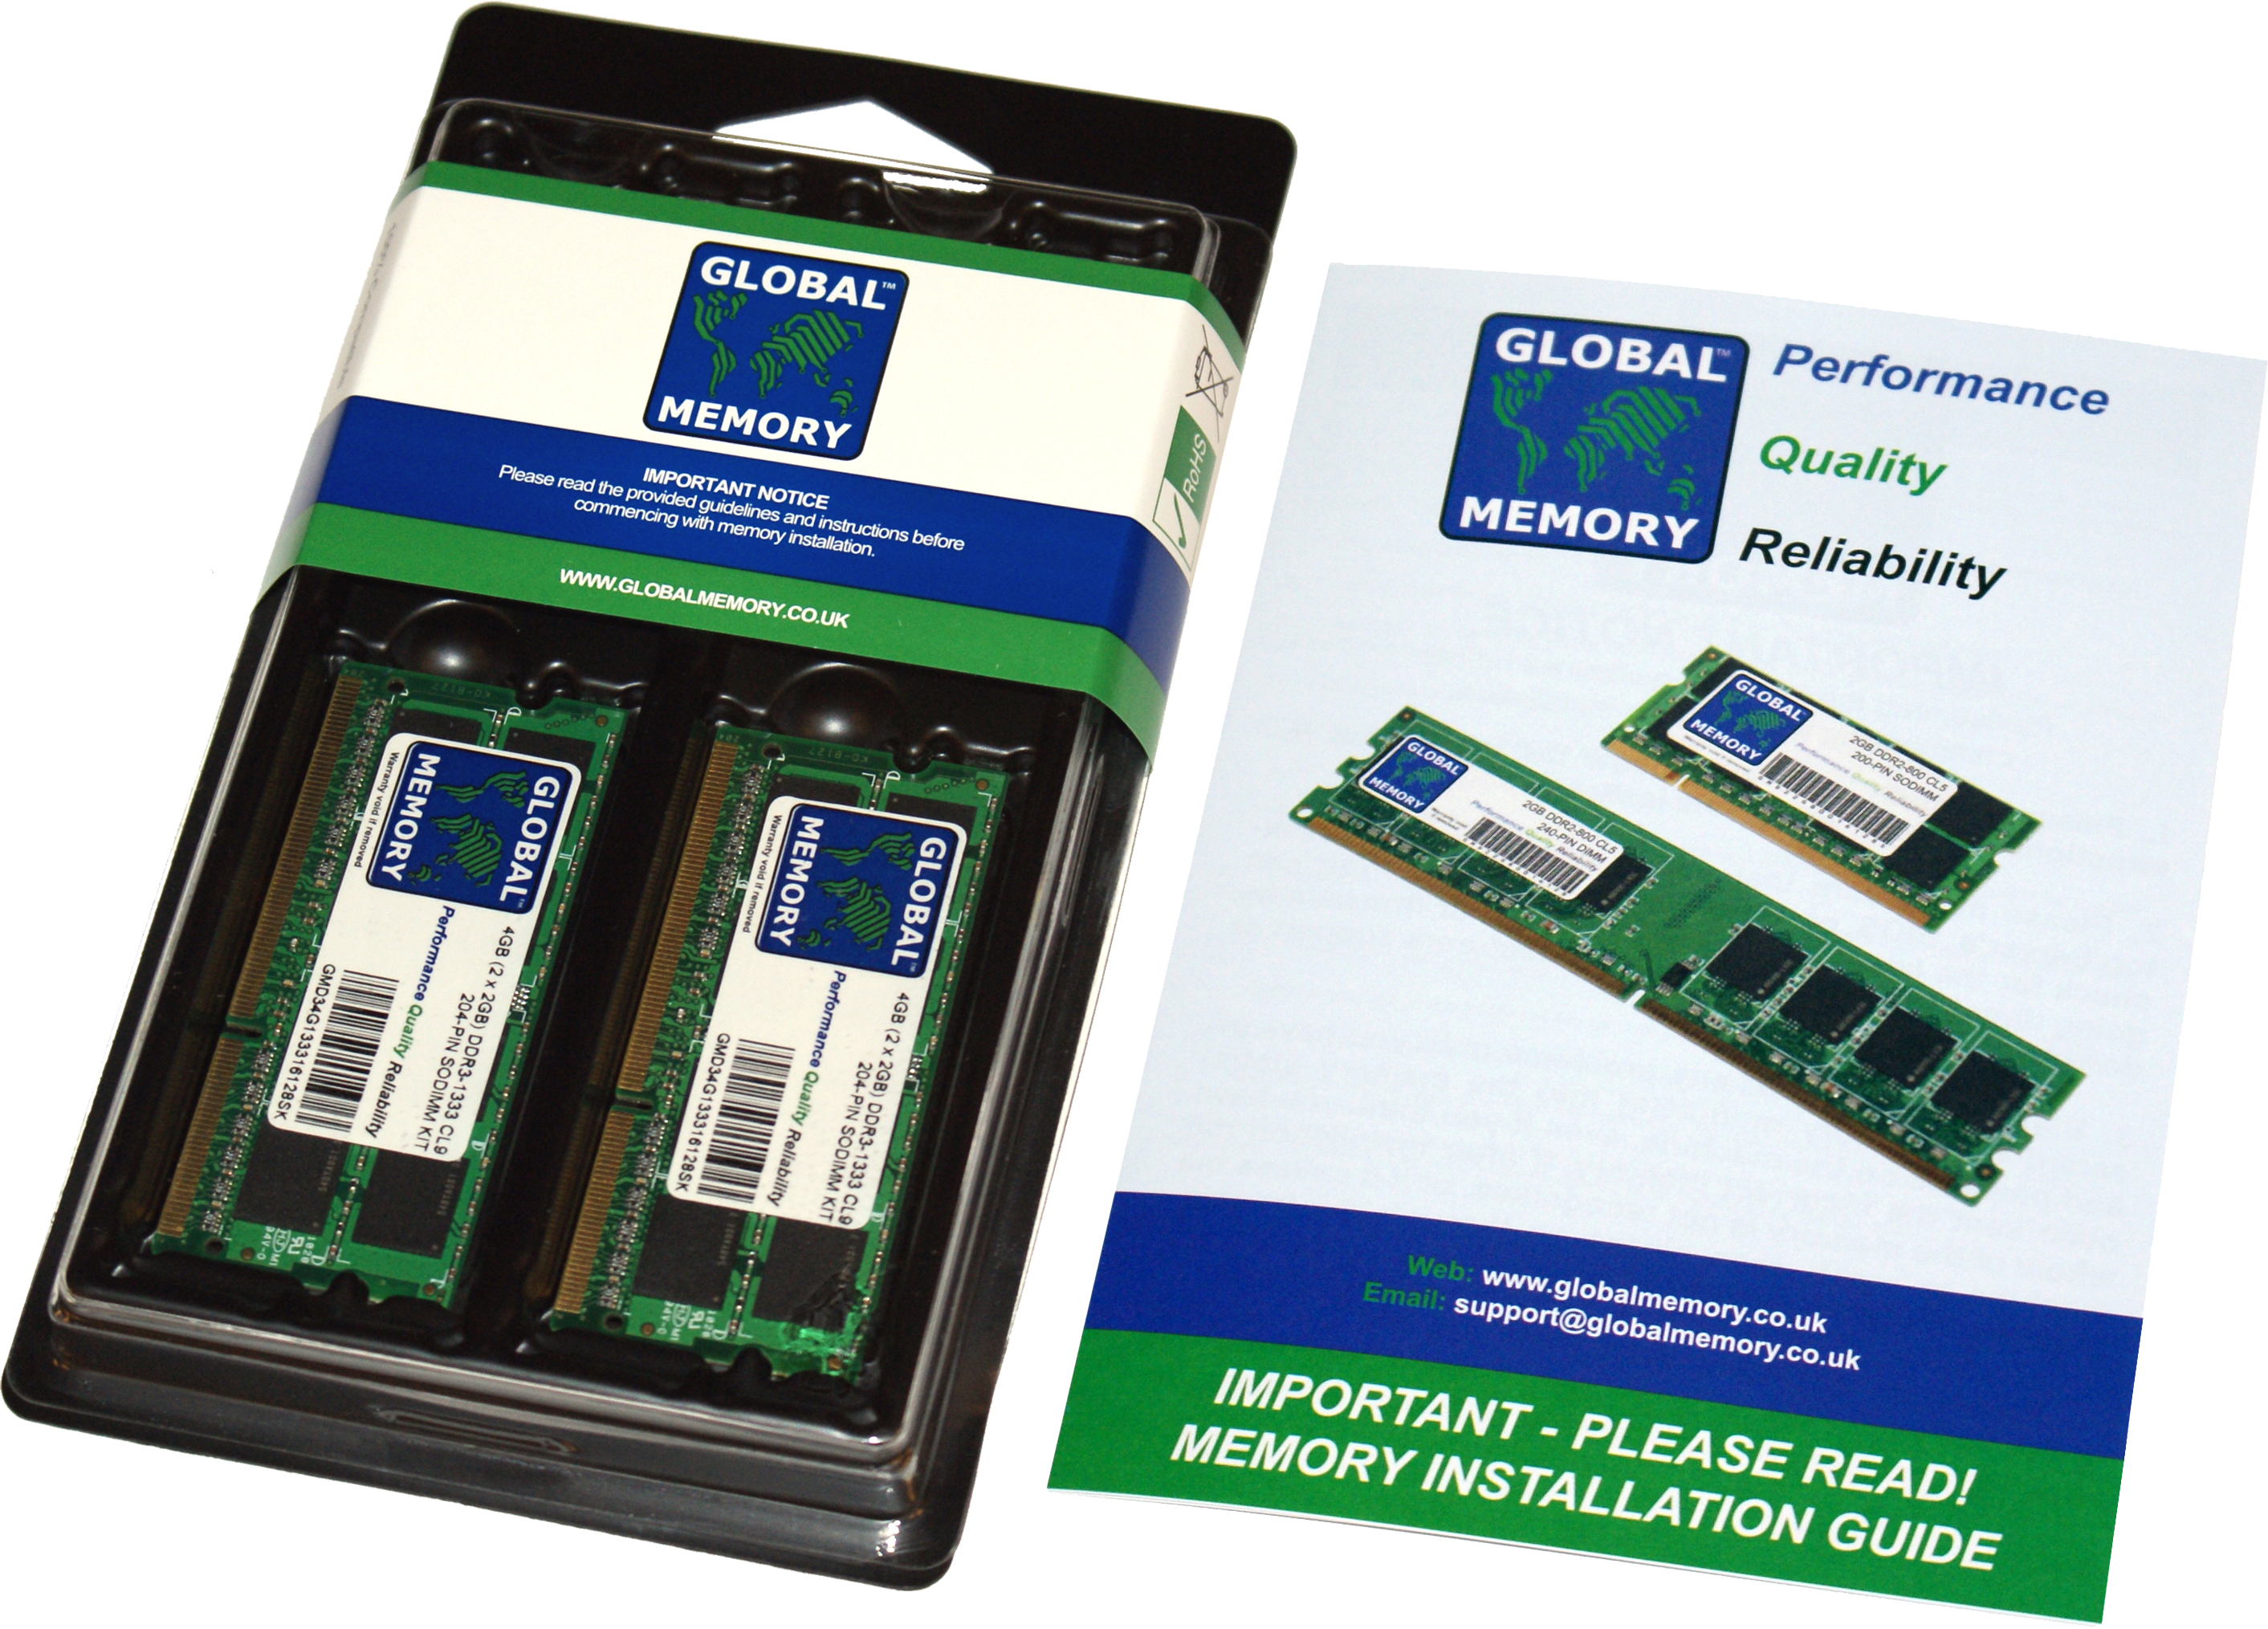 8GB (2 x 4GB) DDR3 1866MHz PC3-14900 204-PIN SODIMM MEMORY RAM KIT FOR TOSHIBA LAPTOPS/NOTEBOOKS